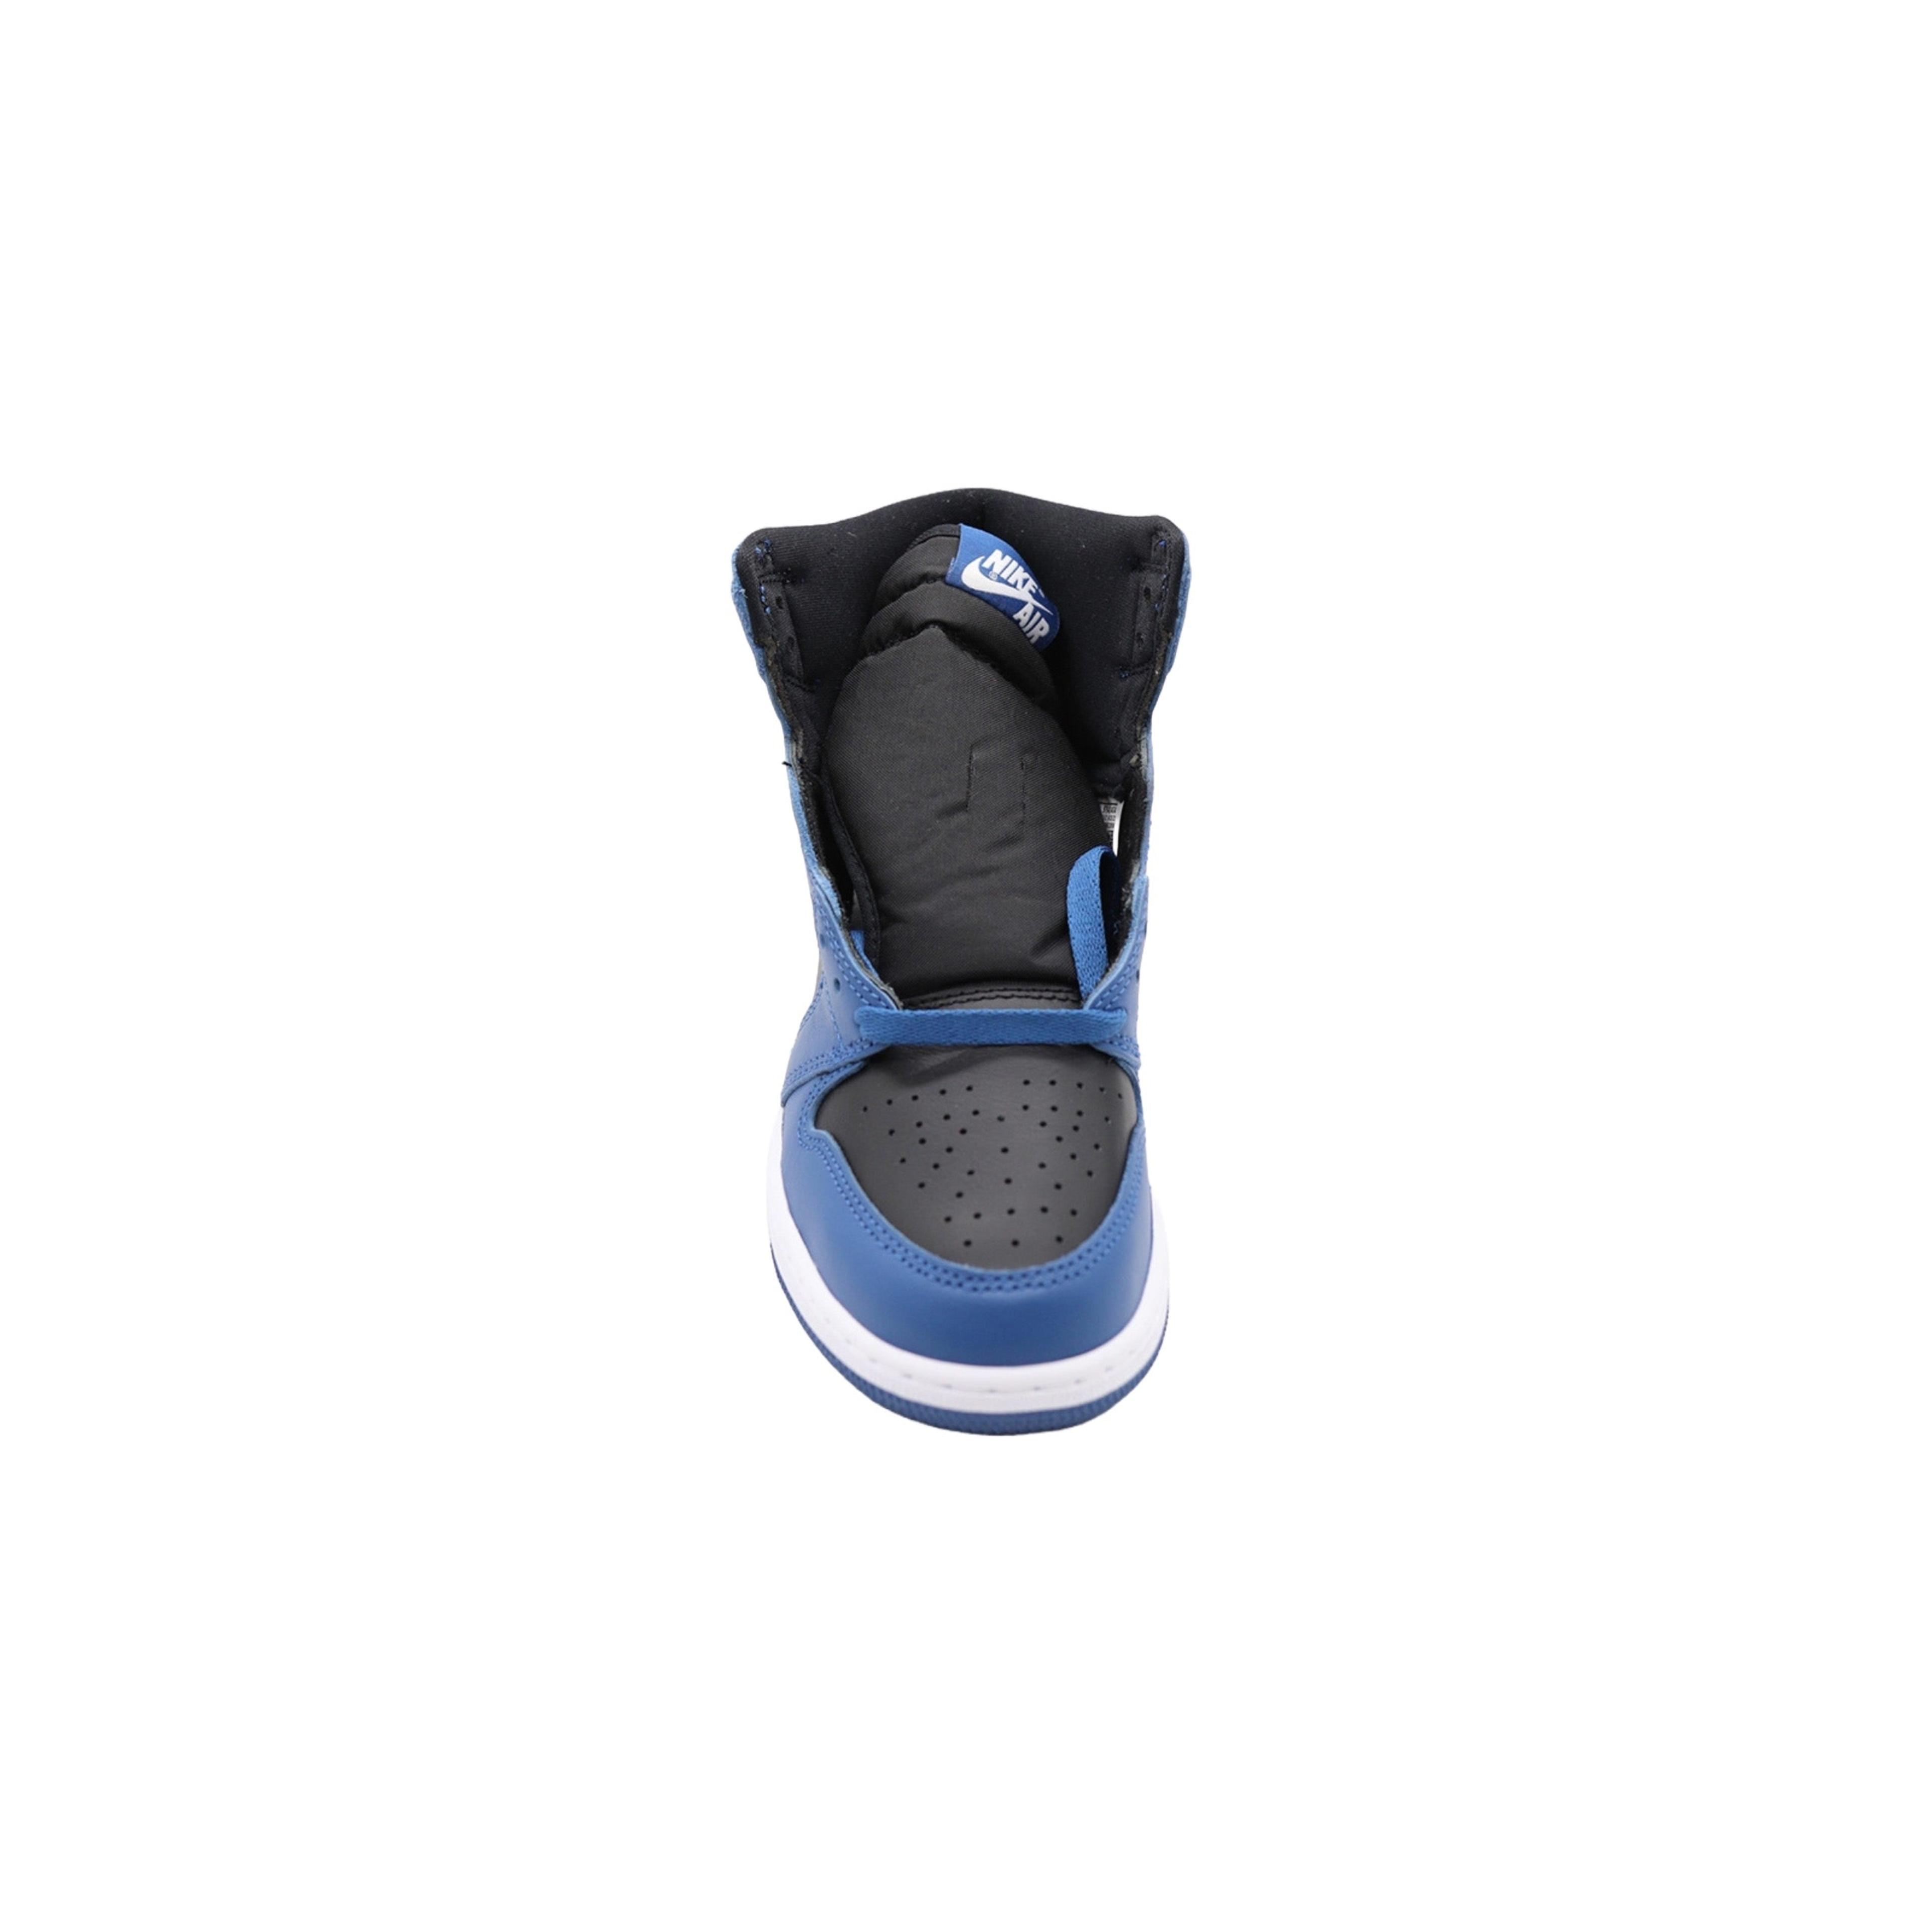 Alternate View 3 of Air Jordan 1 High (PS), Dark Marina Blue